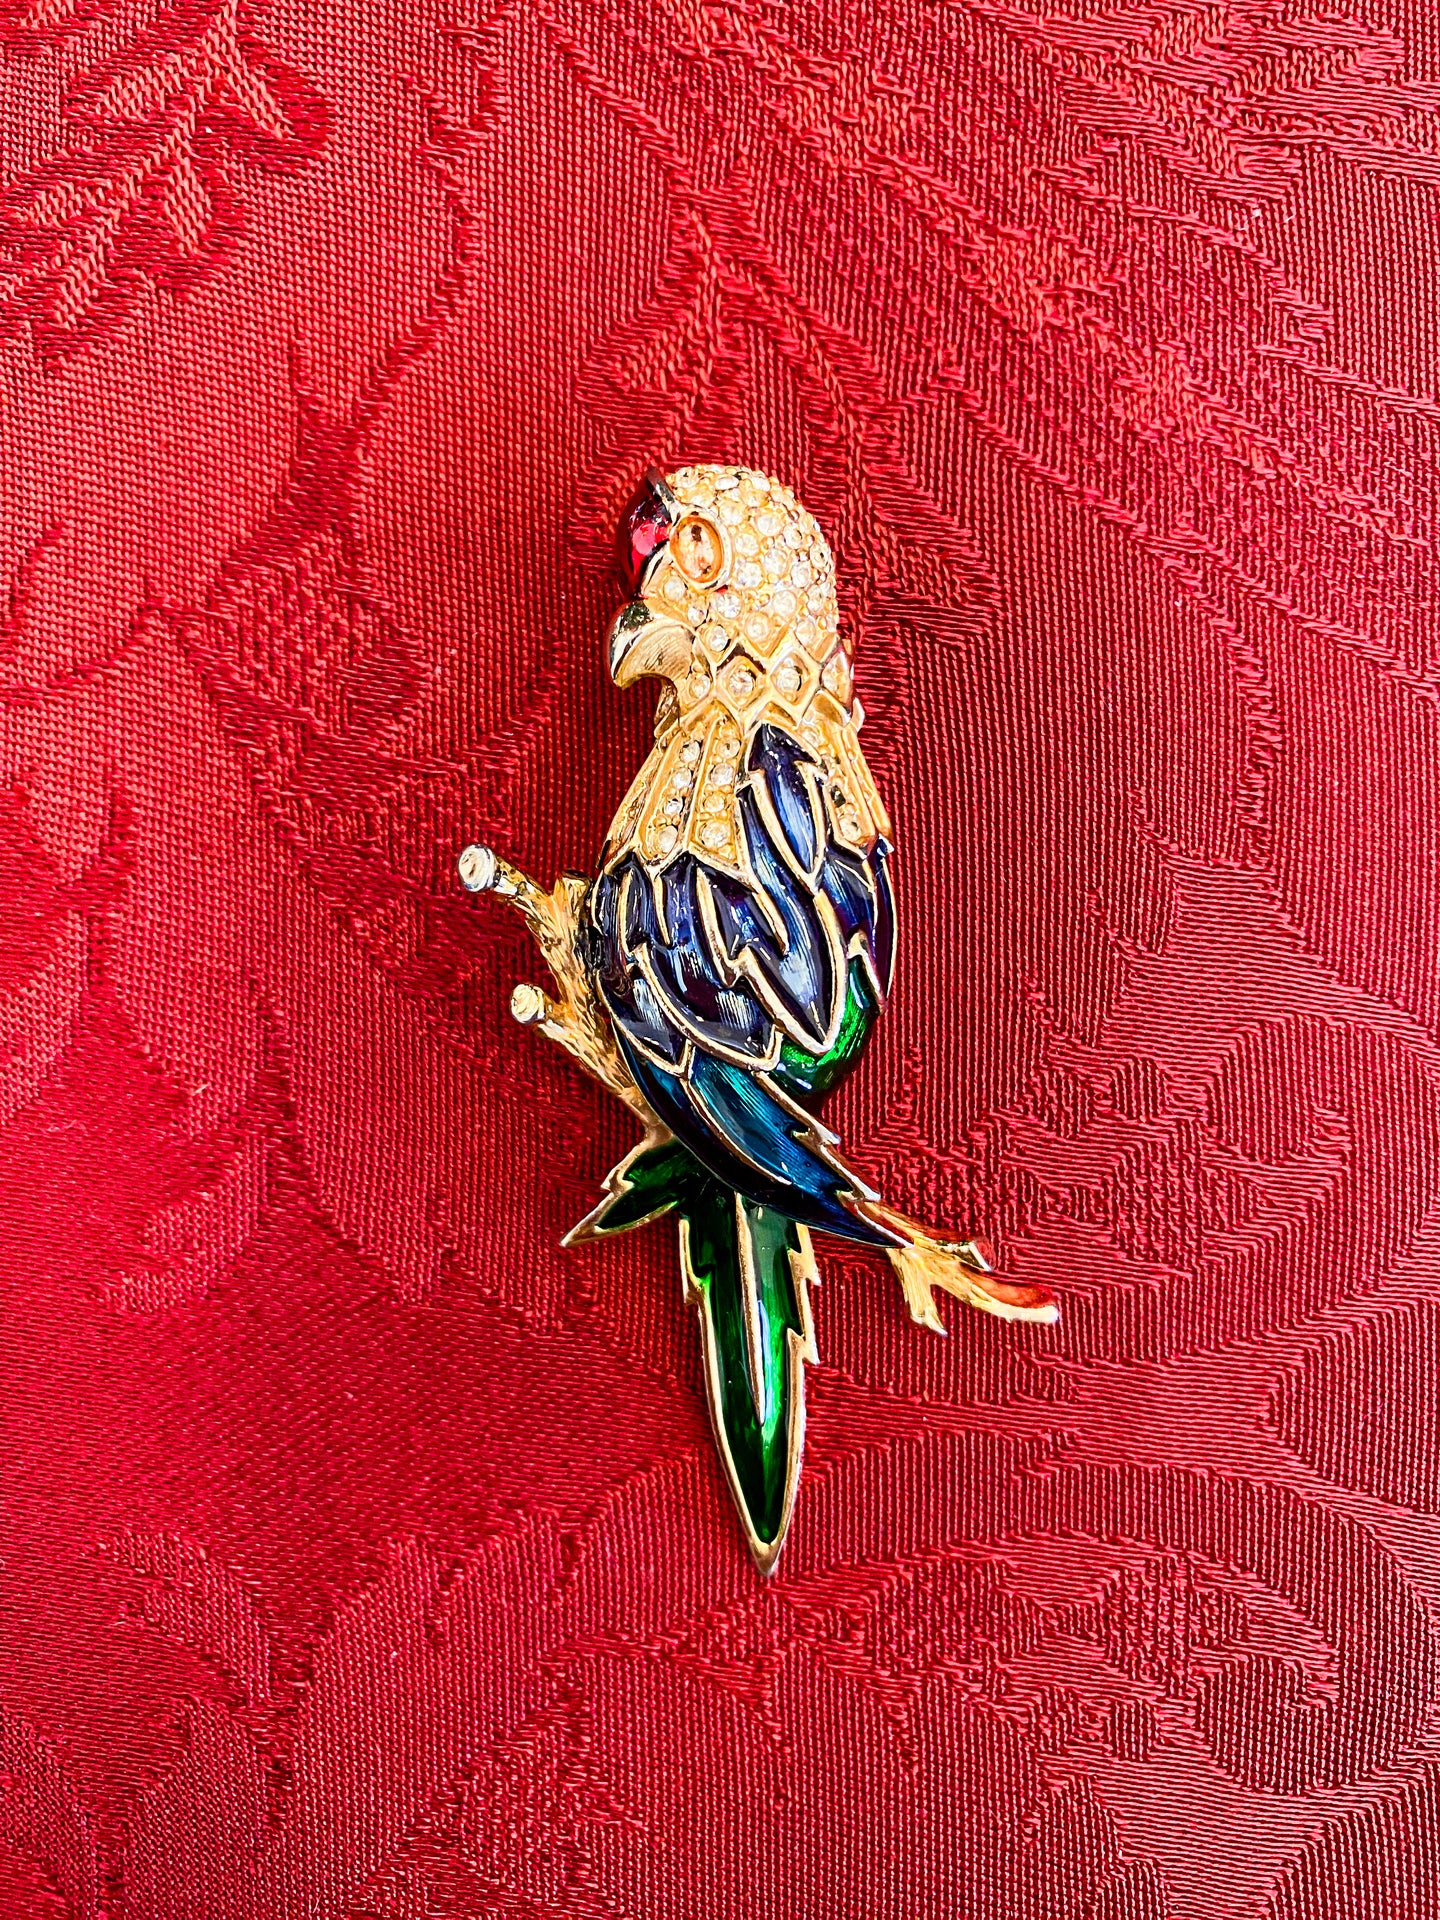 Parrot - Vintage brooch